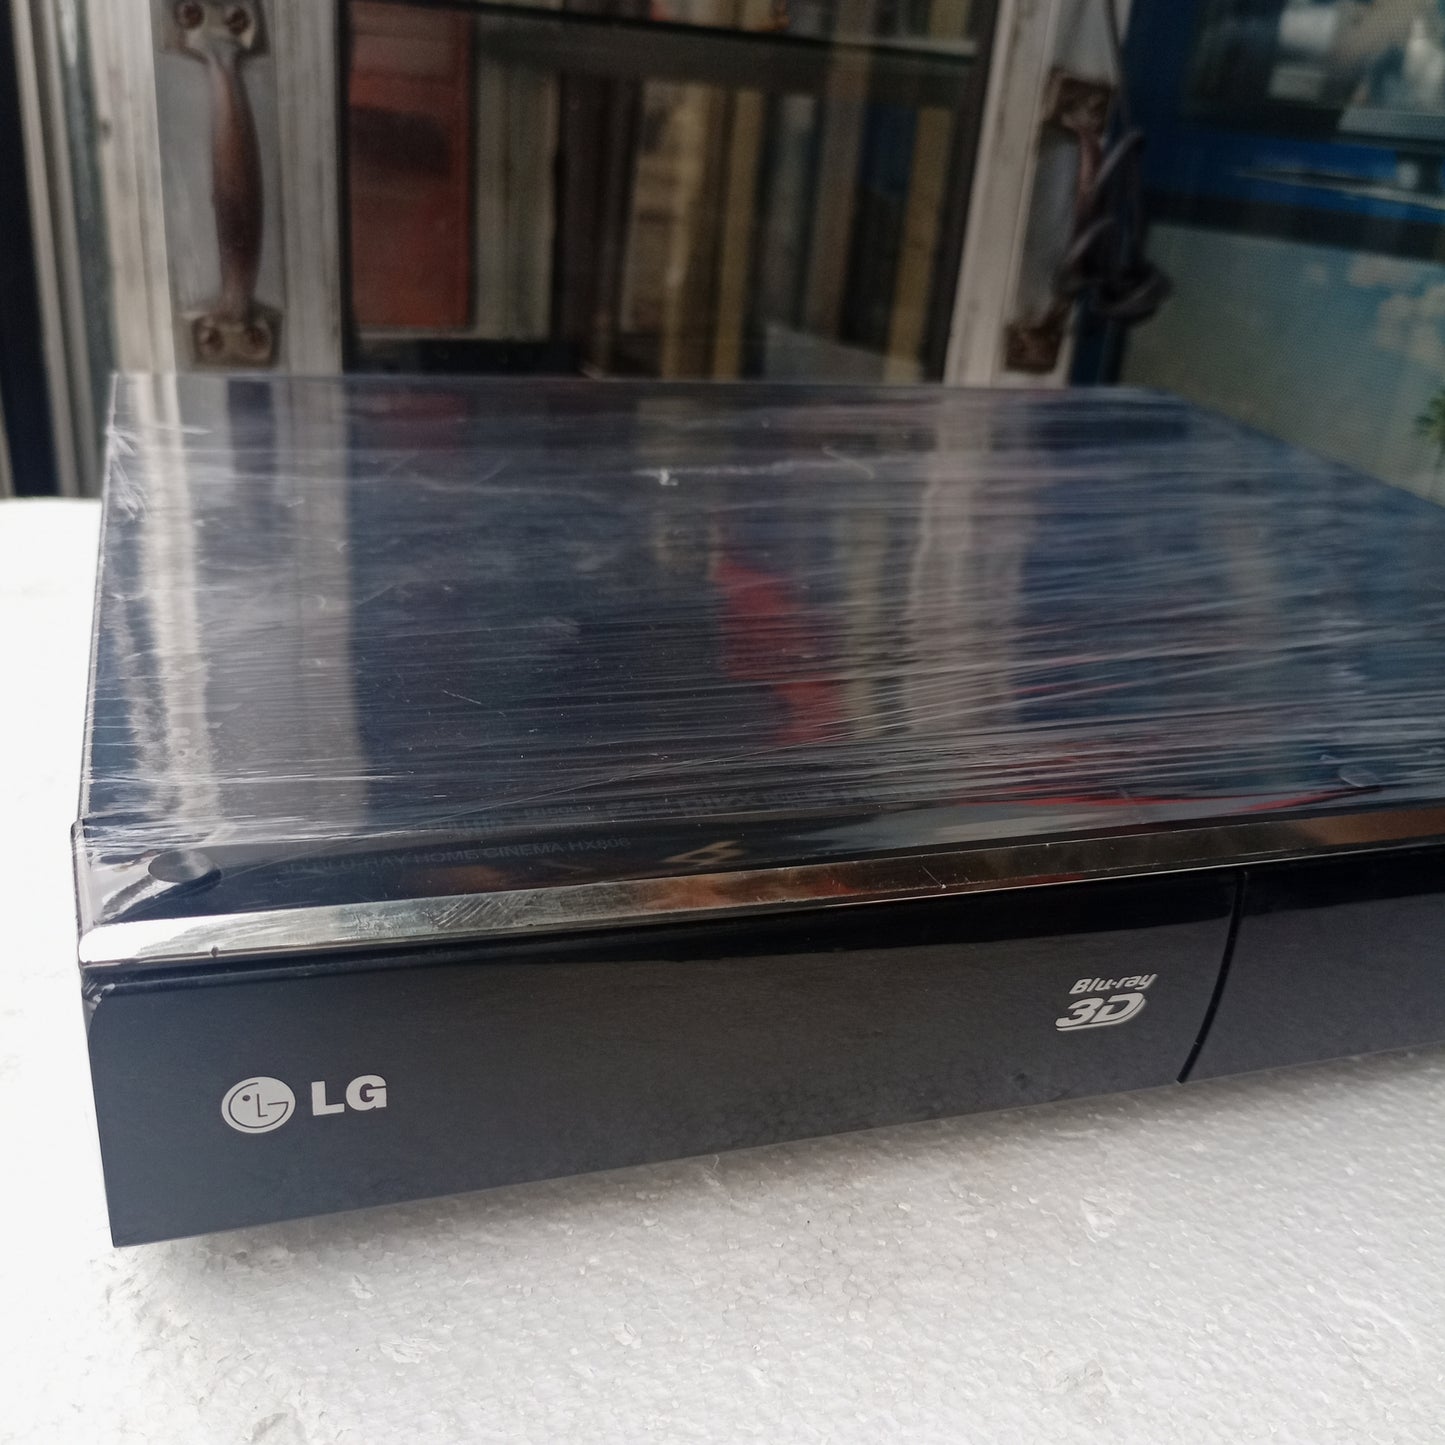 LG HX806TG 3D Blu-ray 850 Watts DVD Home Theater Machine Head - DVD Tray